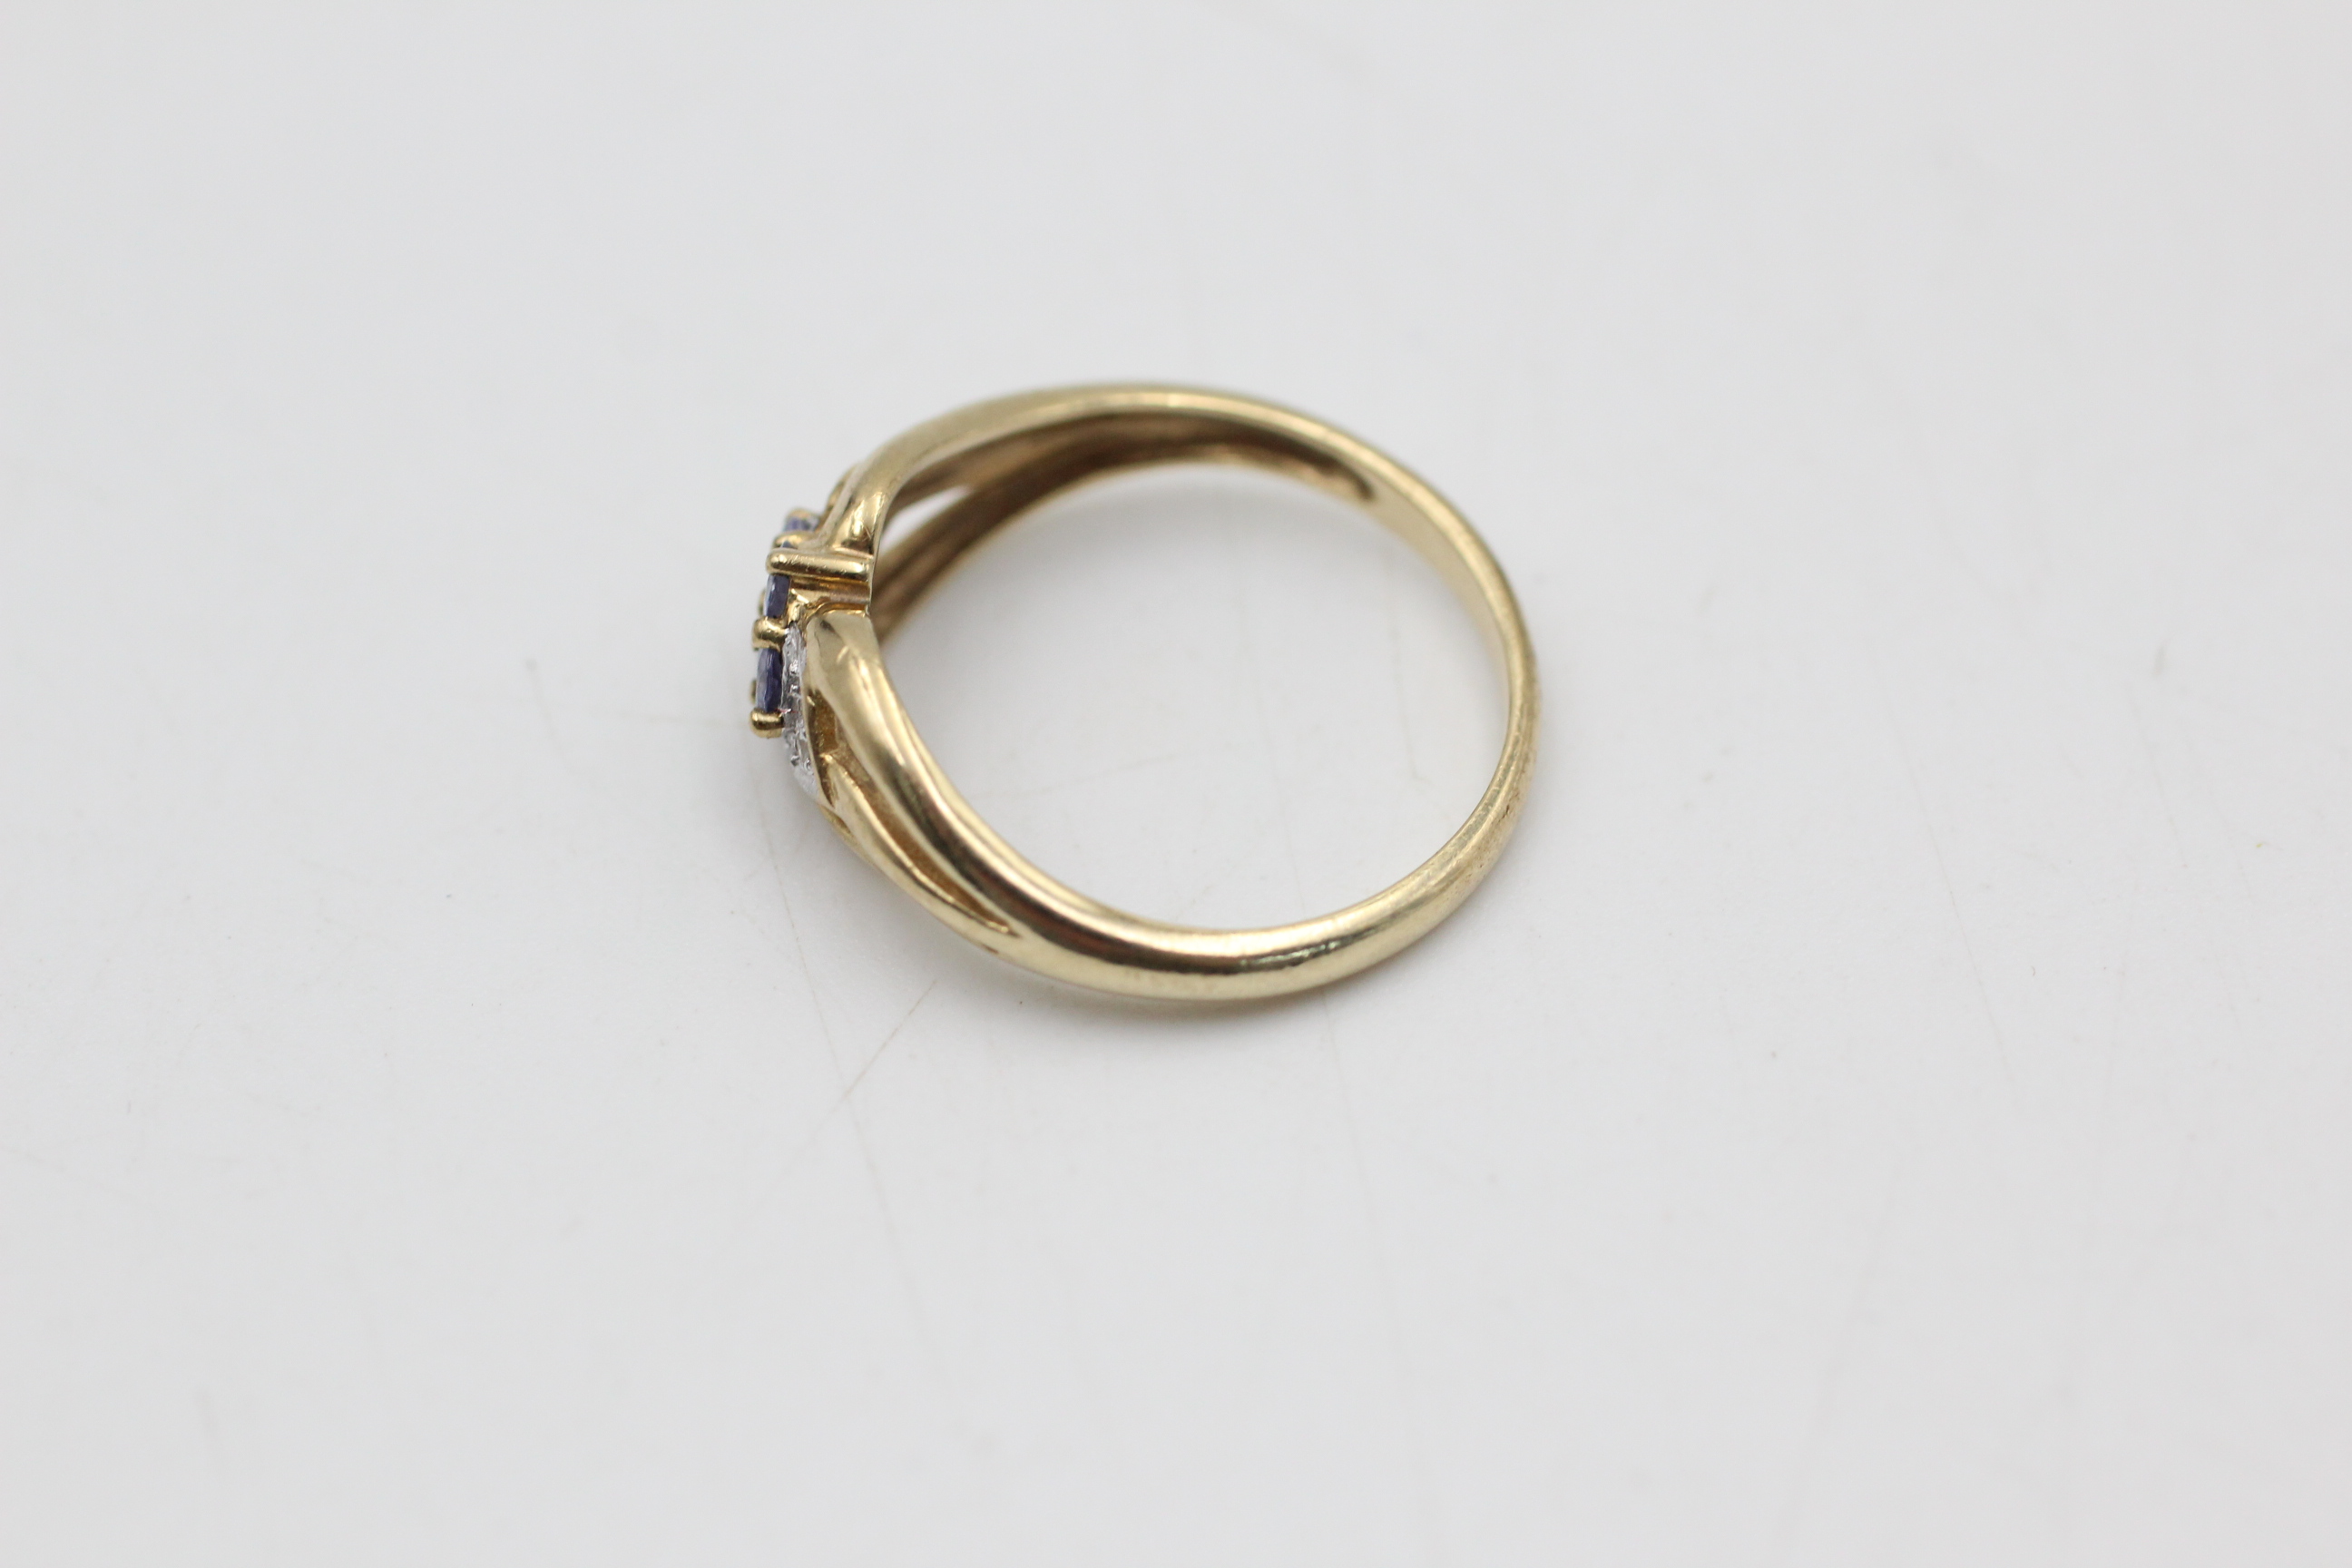 9ct gold diamond & gemstone ring (2g) - Image 2 of 5